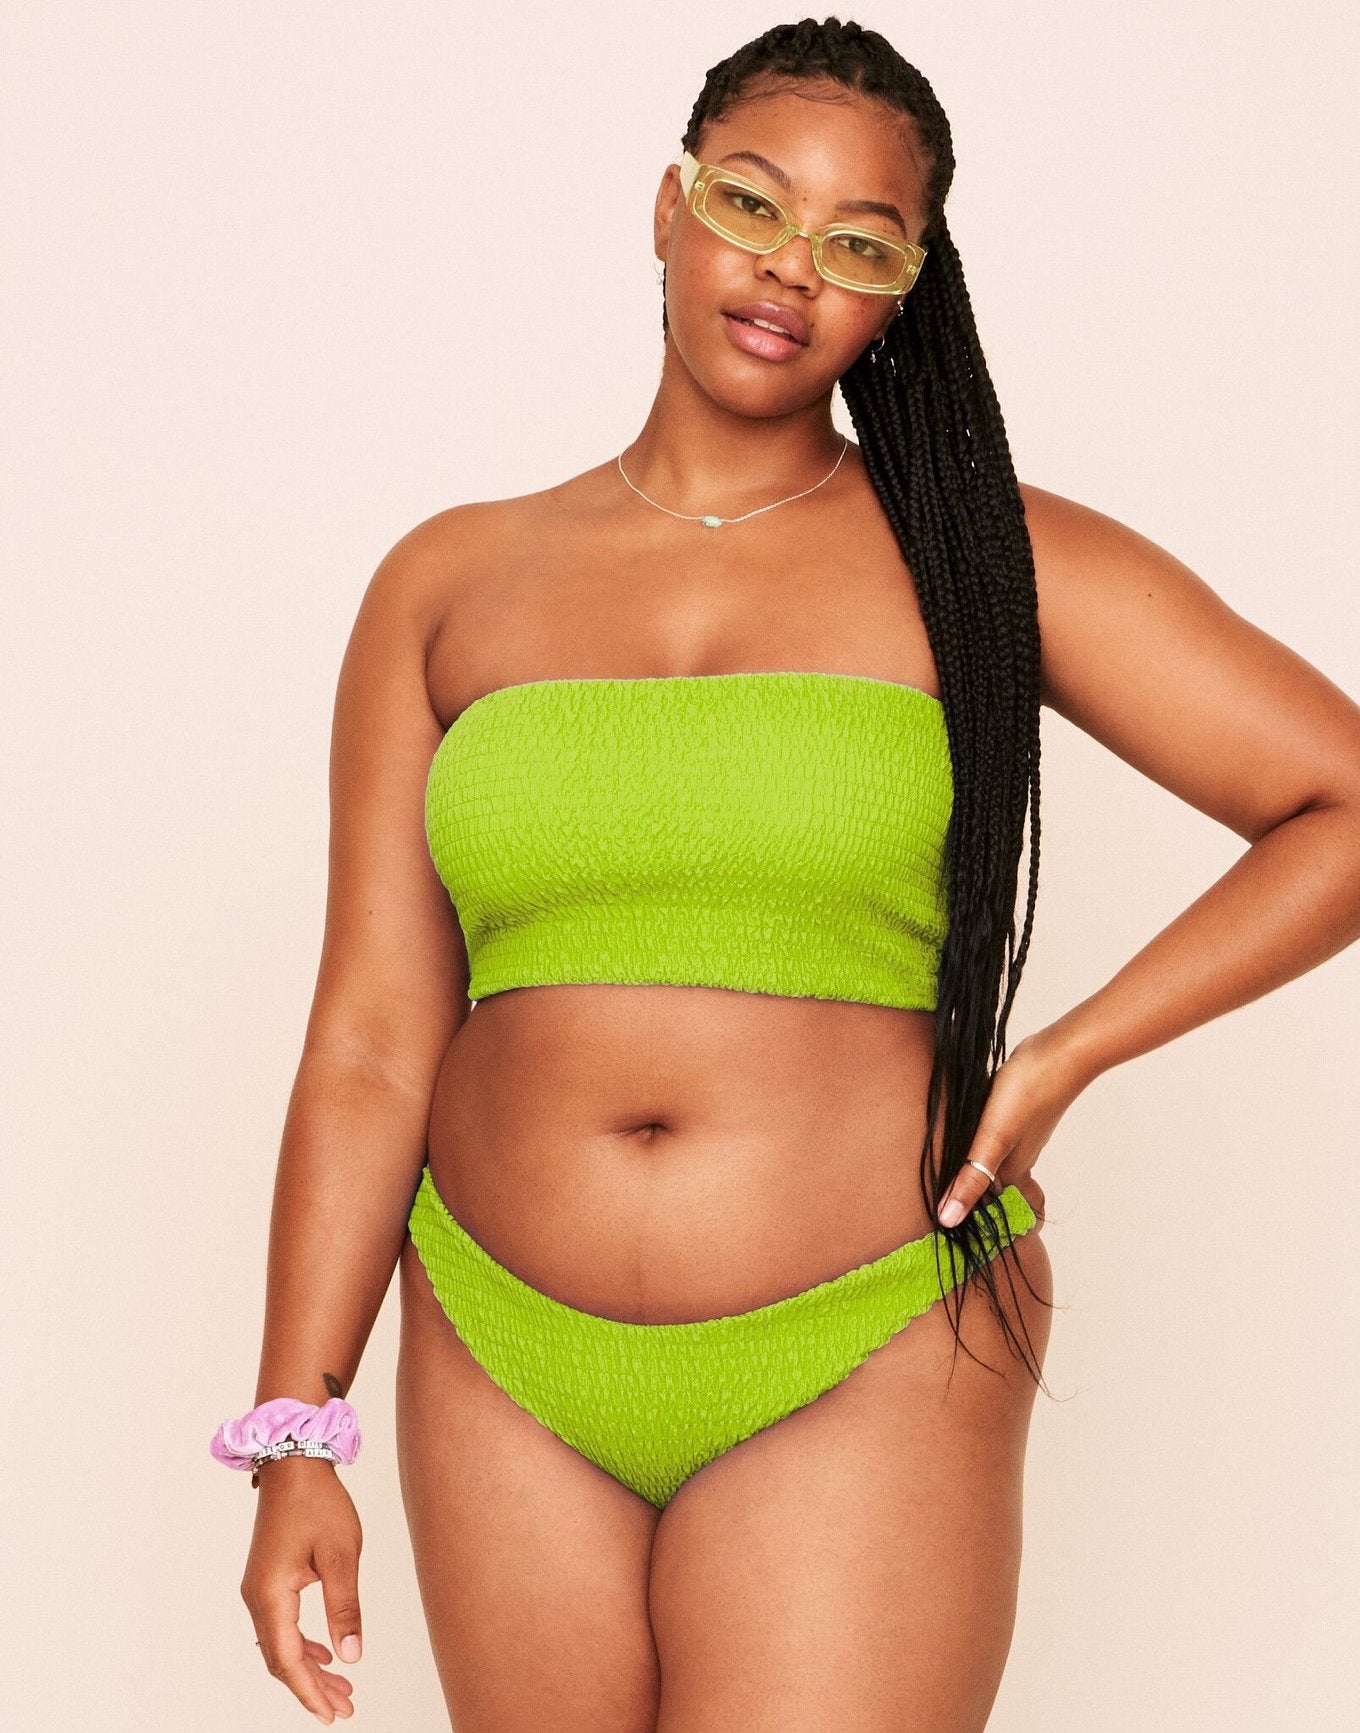 Earth Republic Arlette Smocking Bandeau Top Swim Top in color Acid Lime and shape bikini